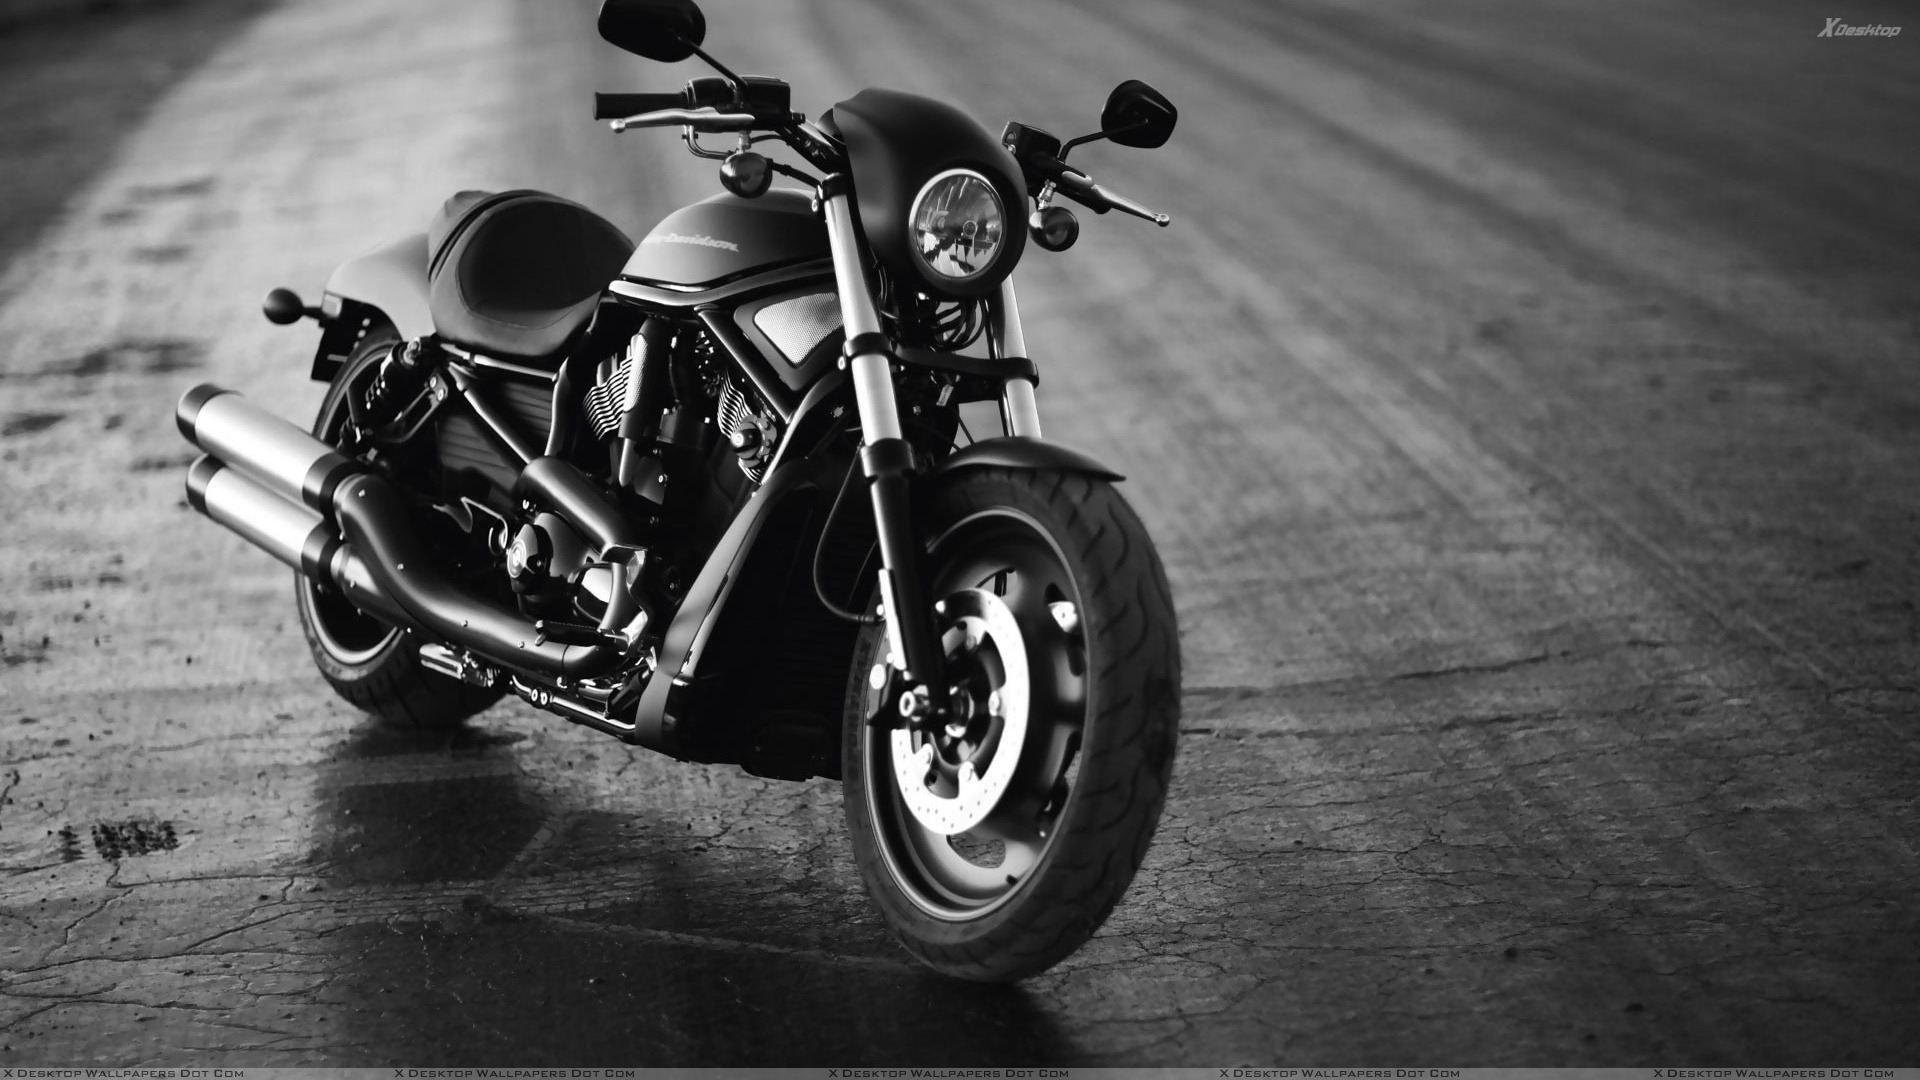 Download wallpaper 800x1200 racer, black, motorcycle, helmet iphone 4s/4  for parallax hd background